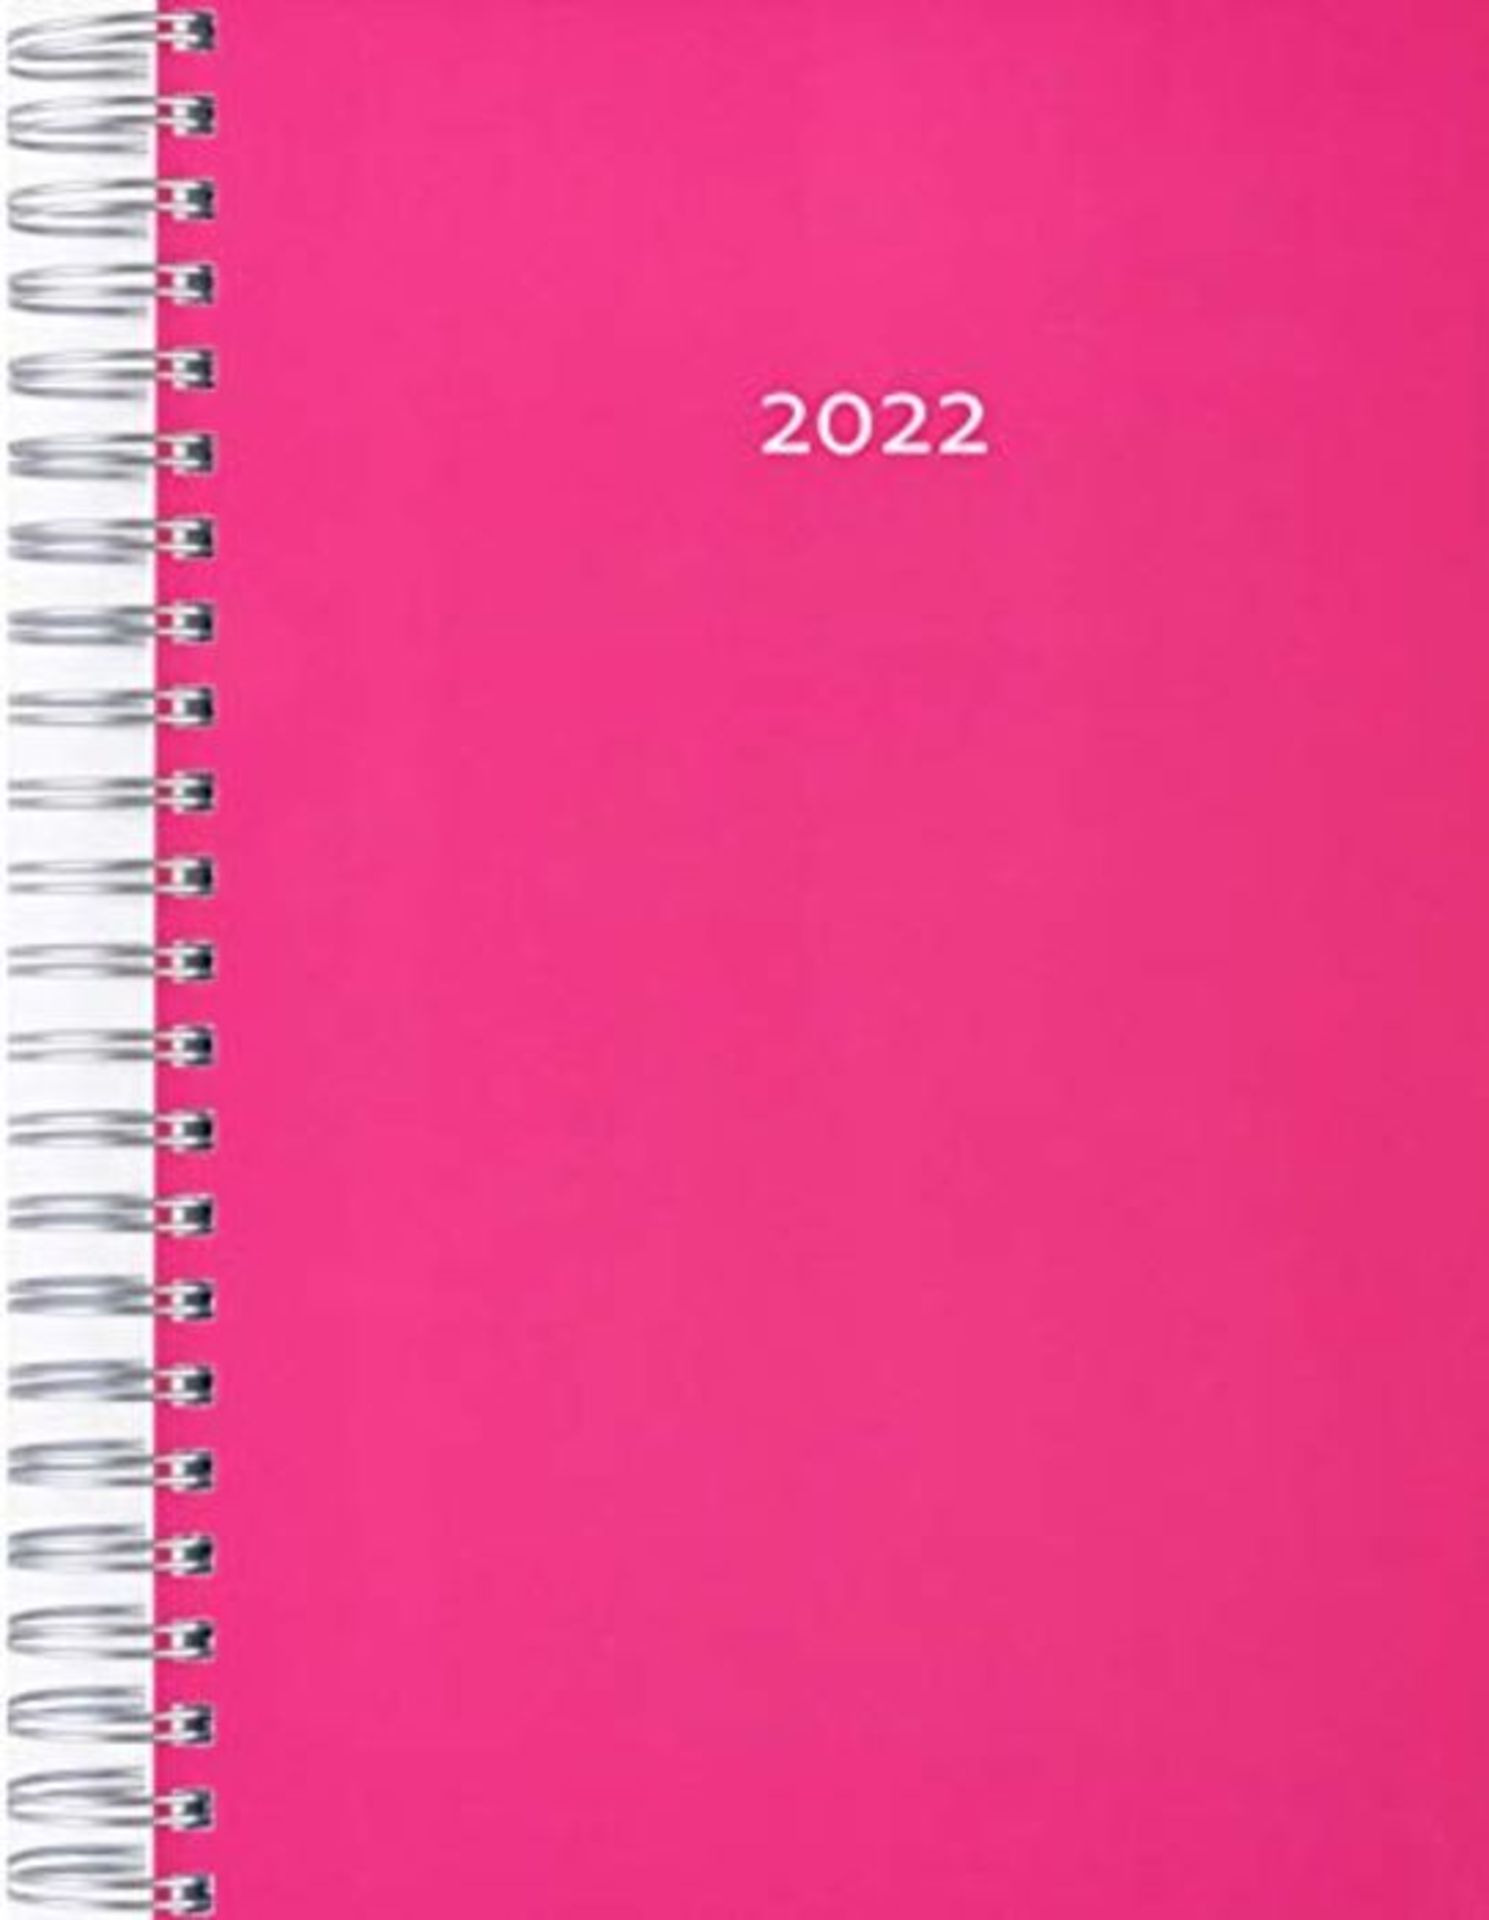 2022 Thick Calendar - Raspberry - Spiral Bound - Full A4 Page Per Day - Daily Calendar